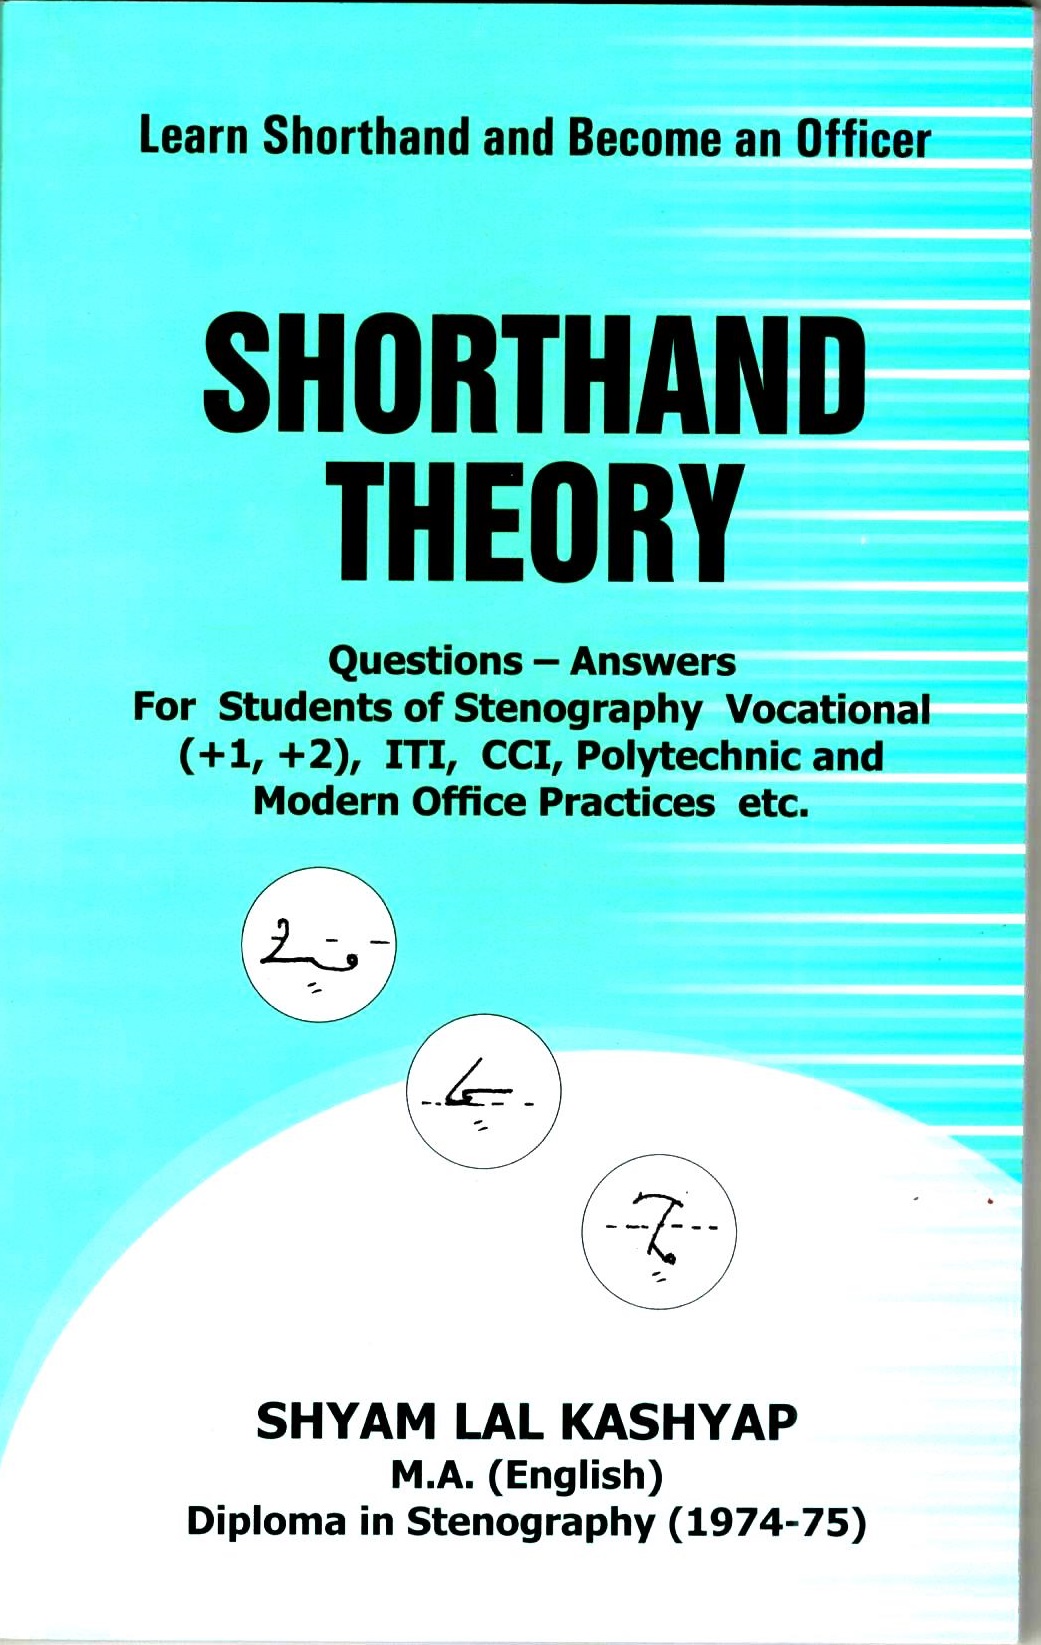 1. Shorthand Theory